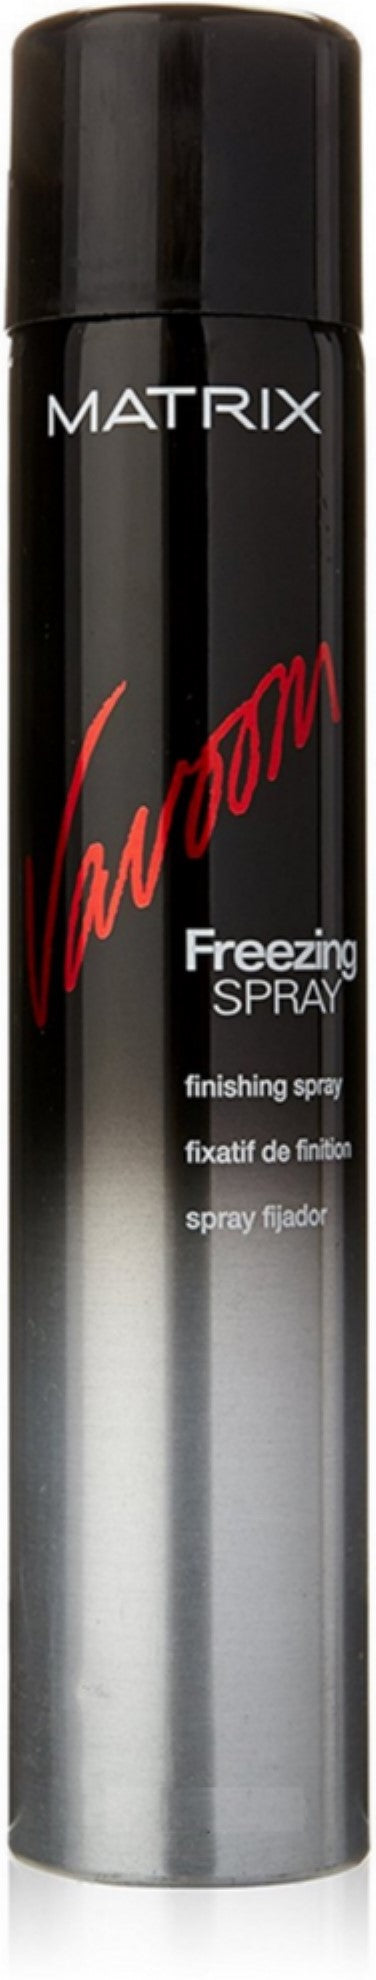 Matrix Vavoom Freezing Hairspray, 11.3 Oz